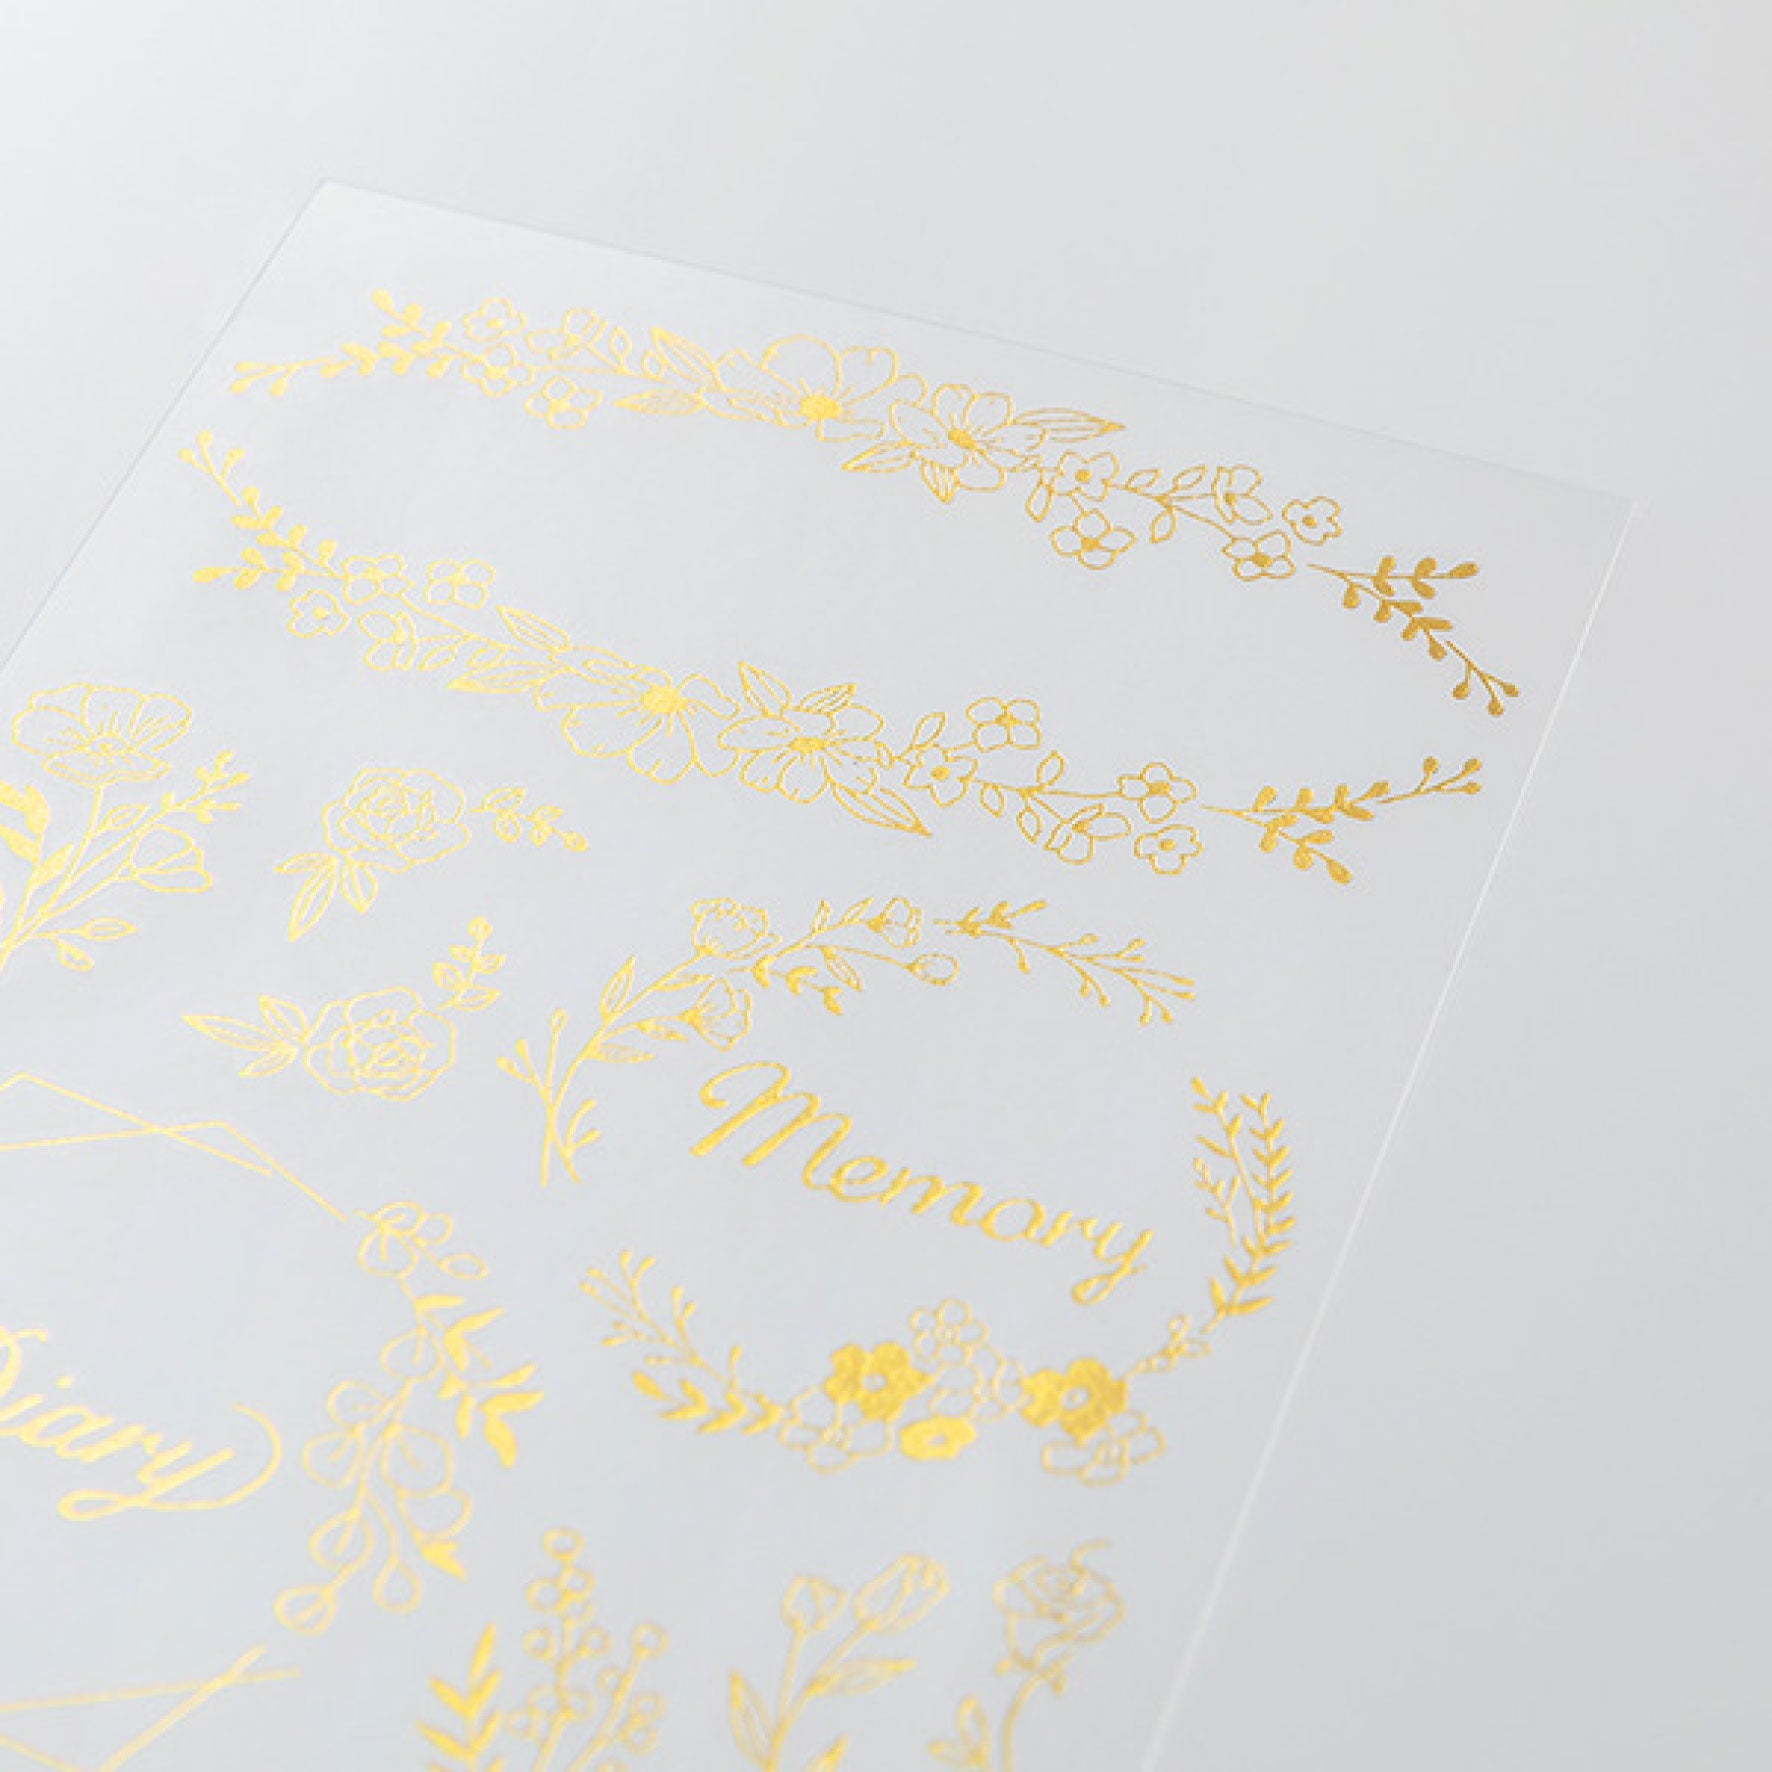 Midori - Planner Sticker - Foil Transfer - Floral